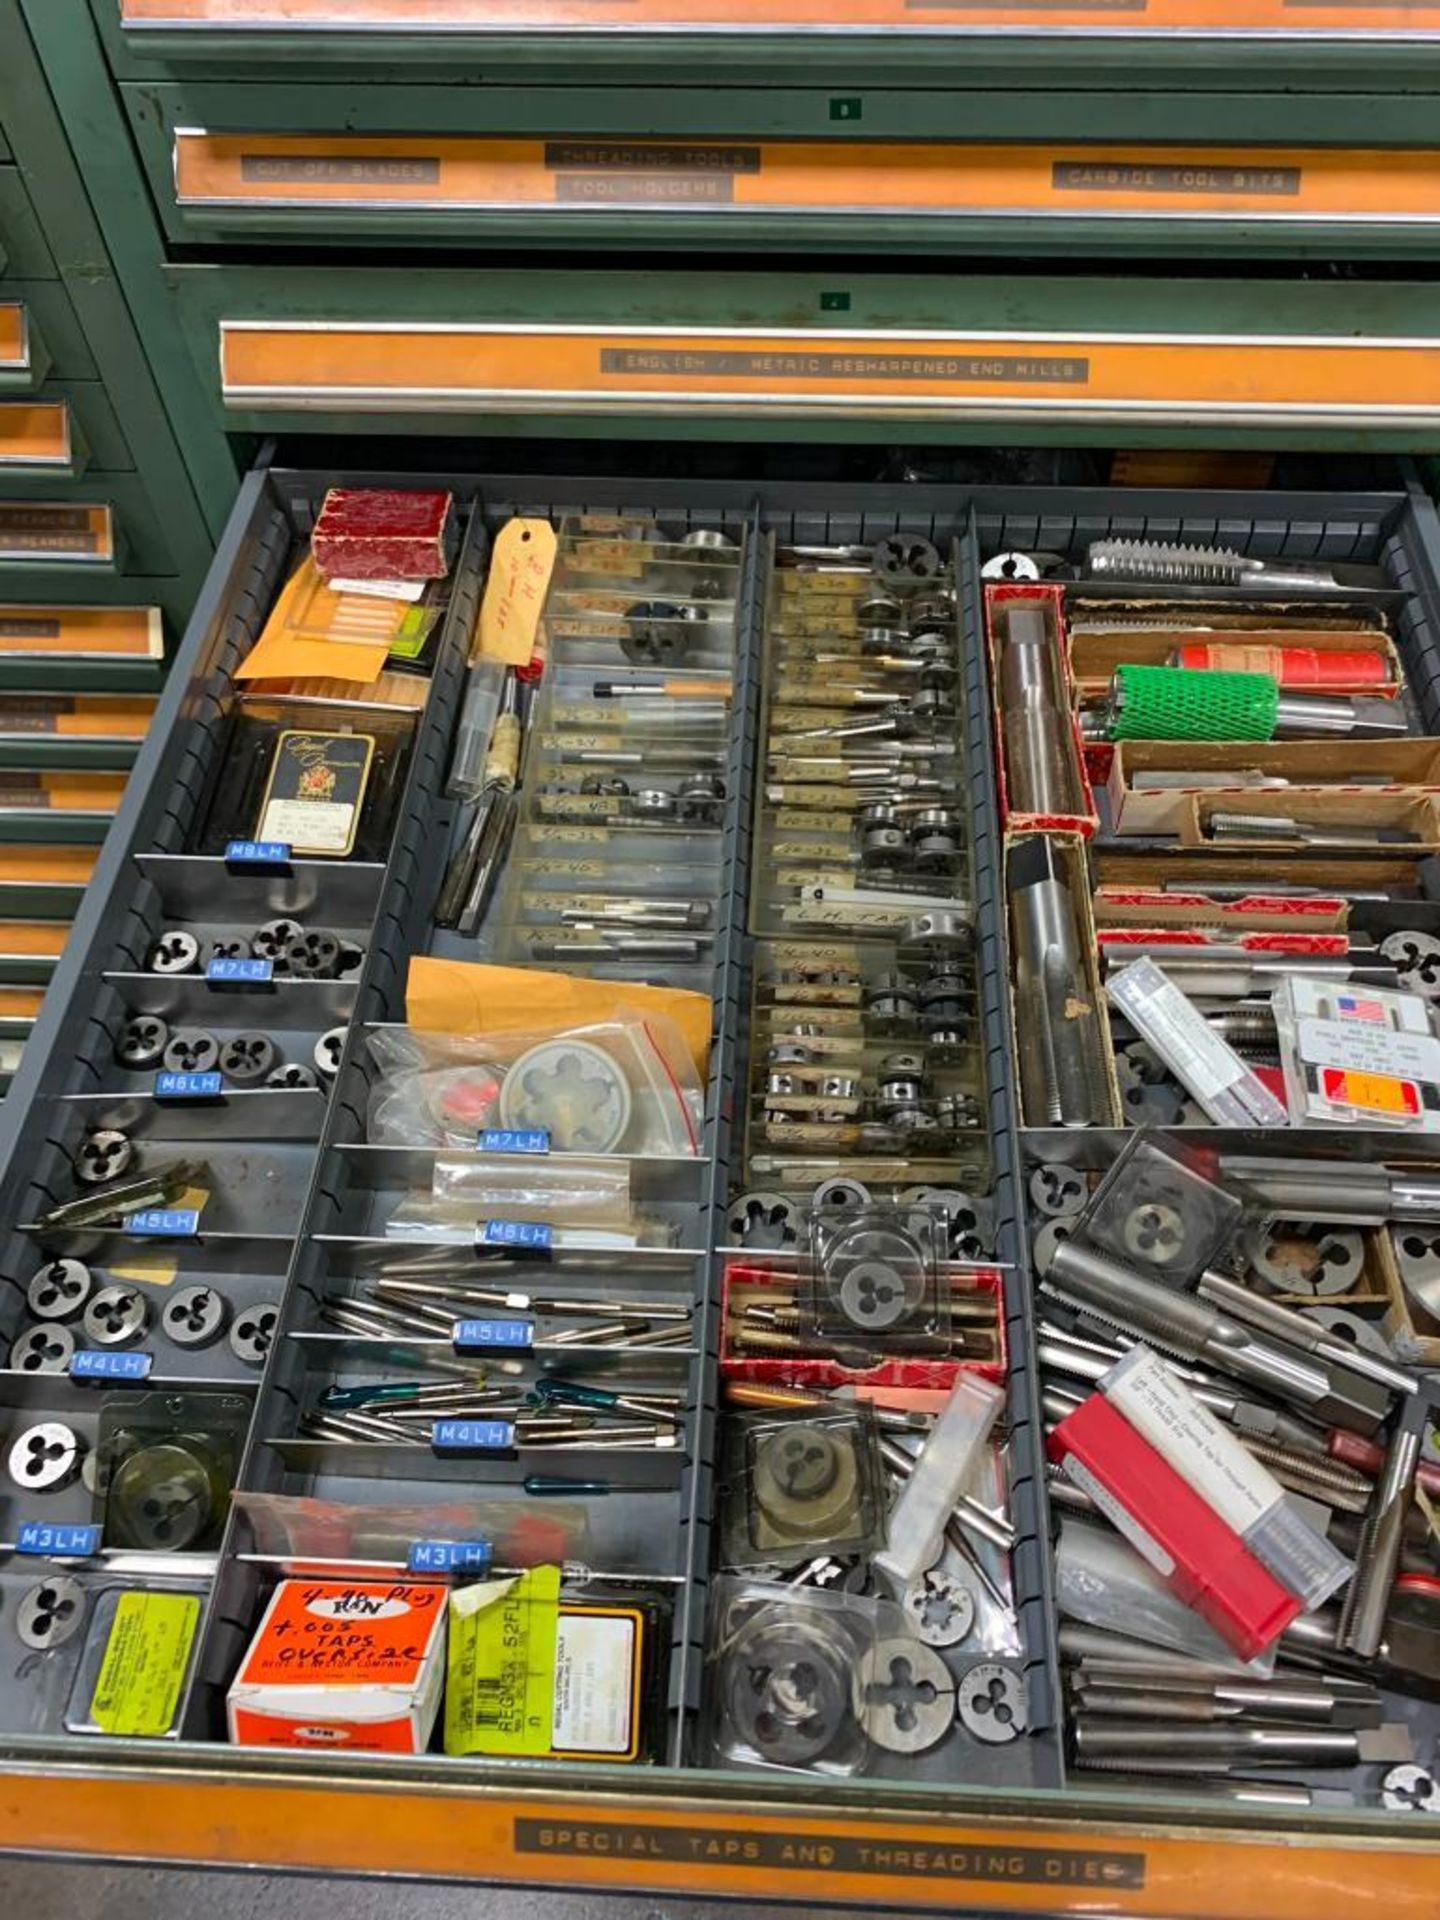 Vidmar 12-Drawer Cabinet w/ Tool Holders, Endmills, Dies, Allen Wrenches, Die Handles, Bronze, Files - Image 5 of 12